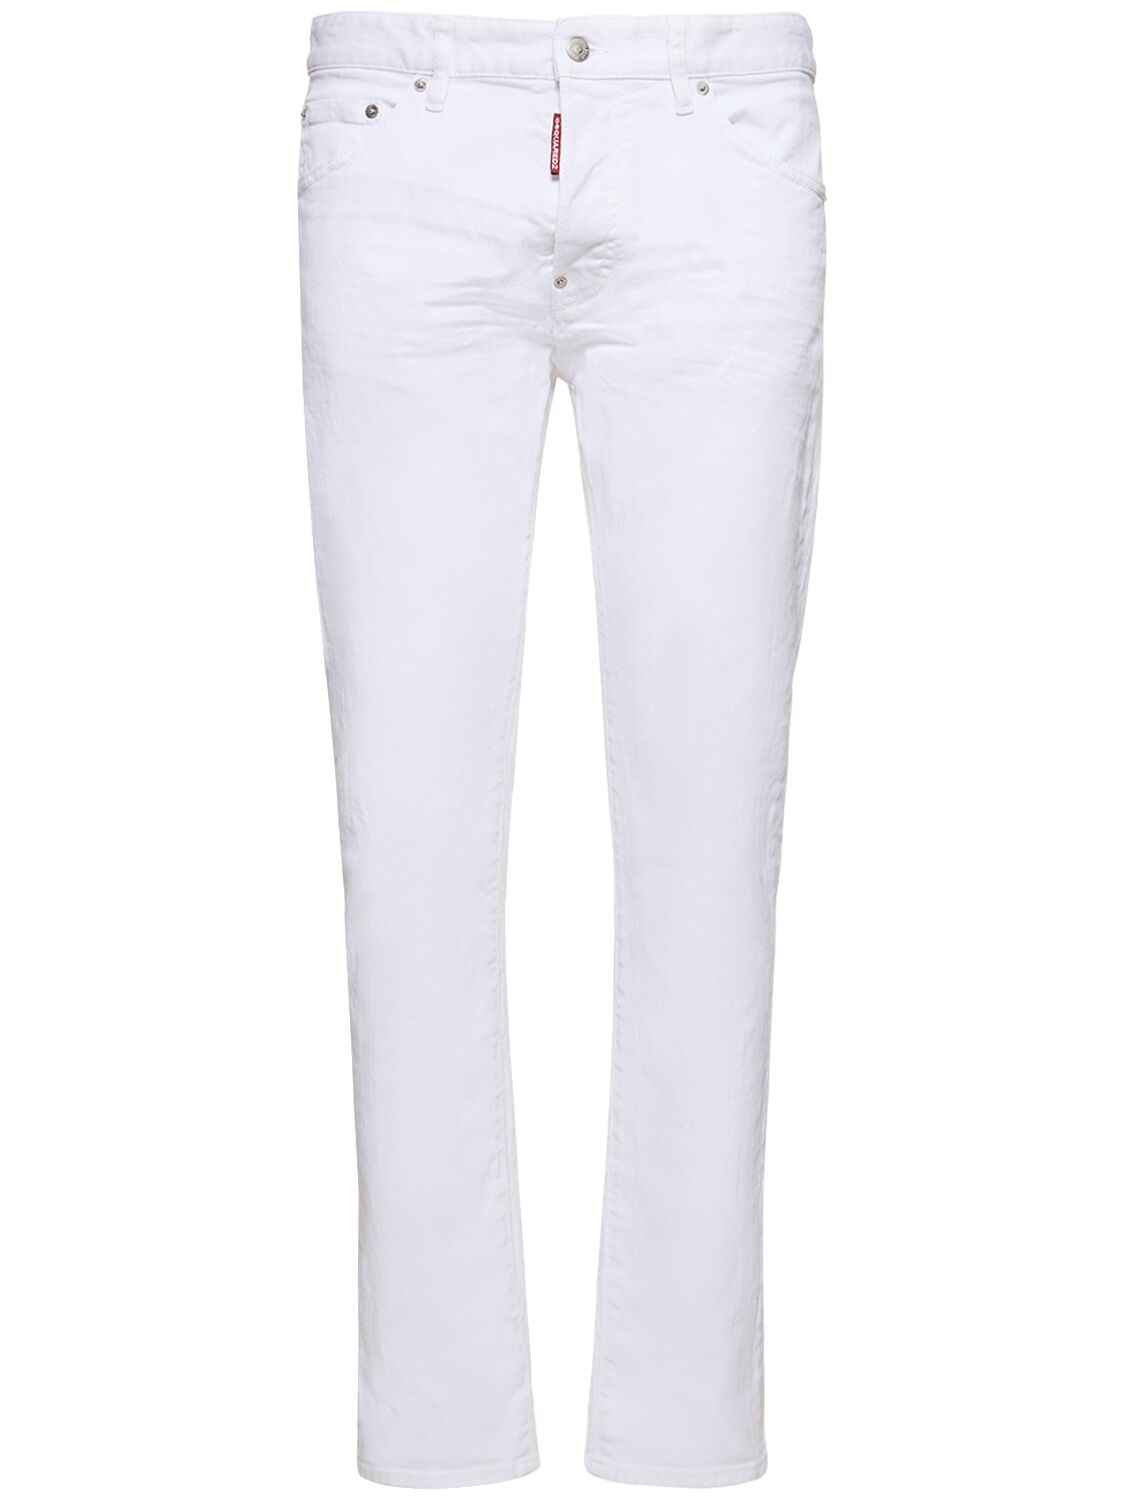 Image of Cool Guy White Bull Cotton Denim Jeans